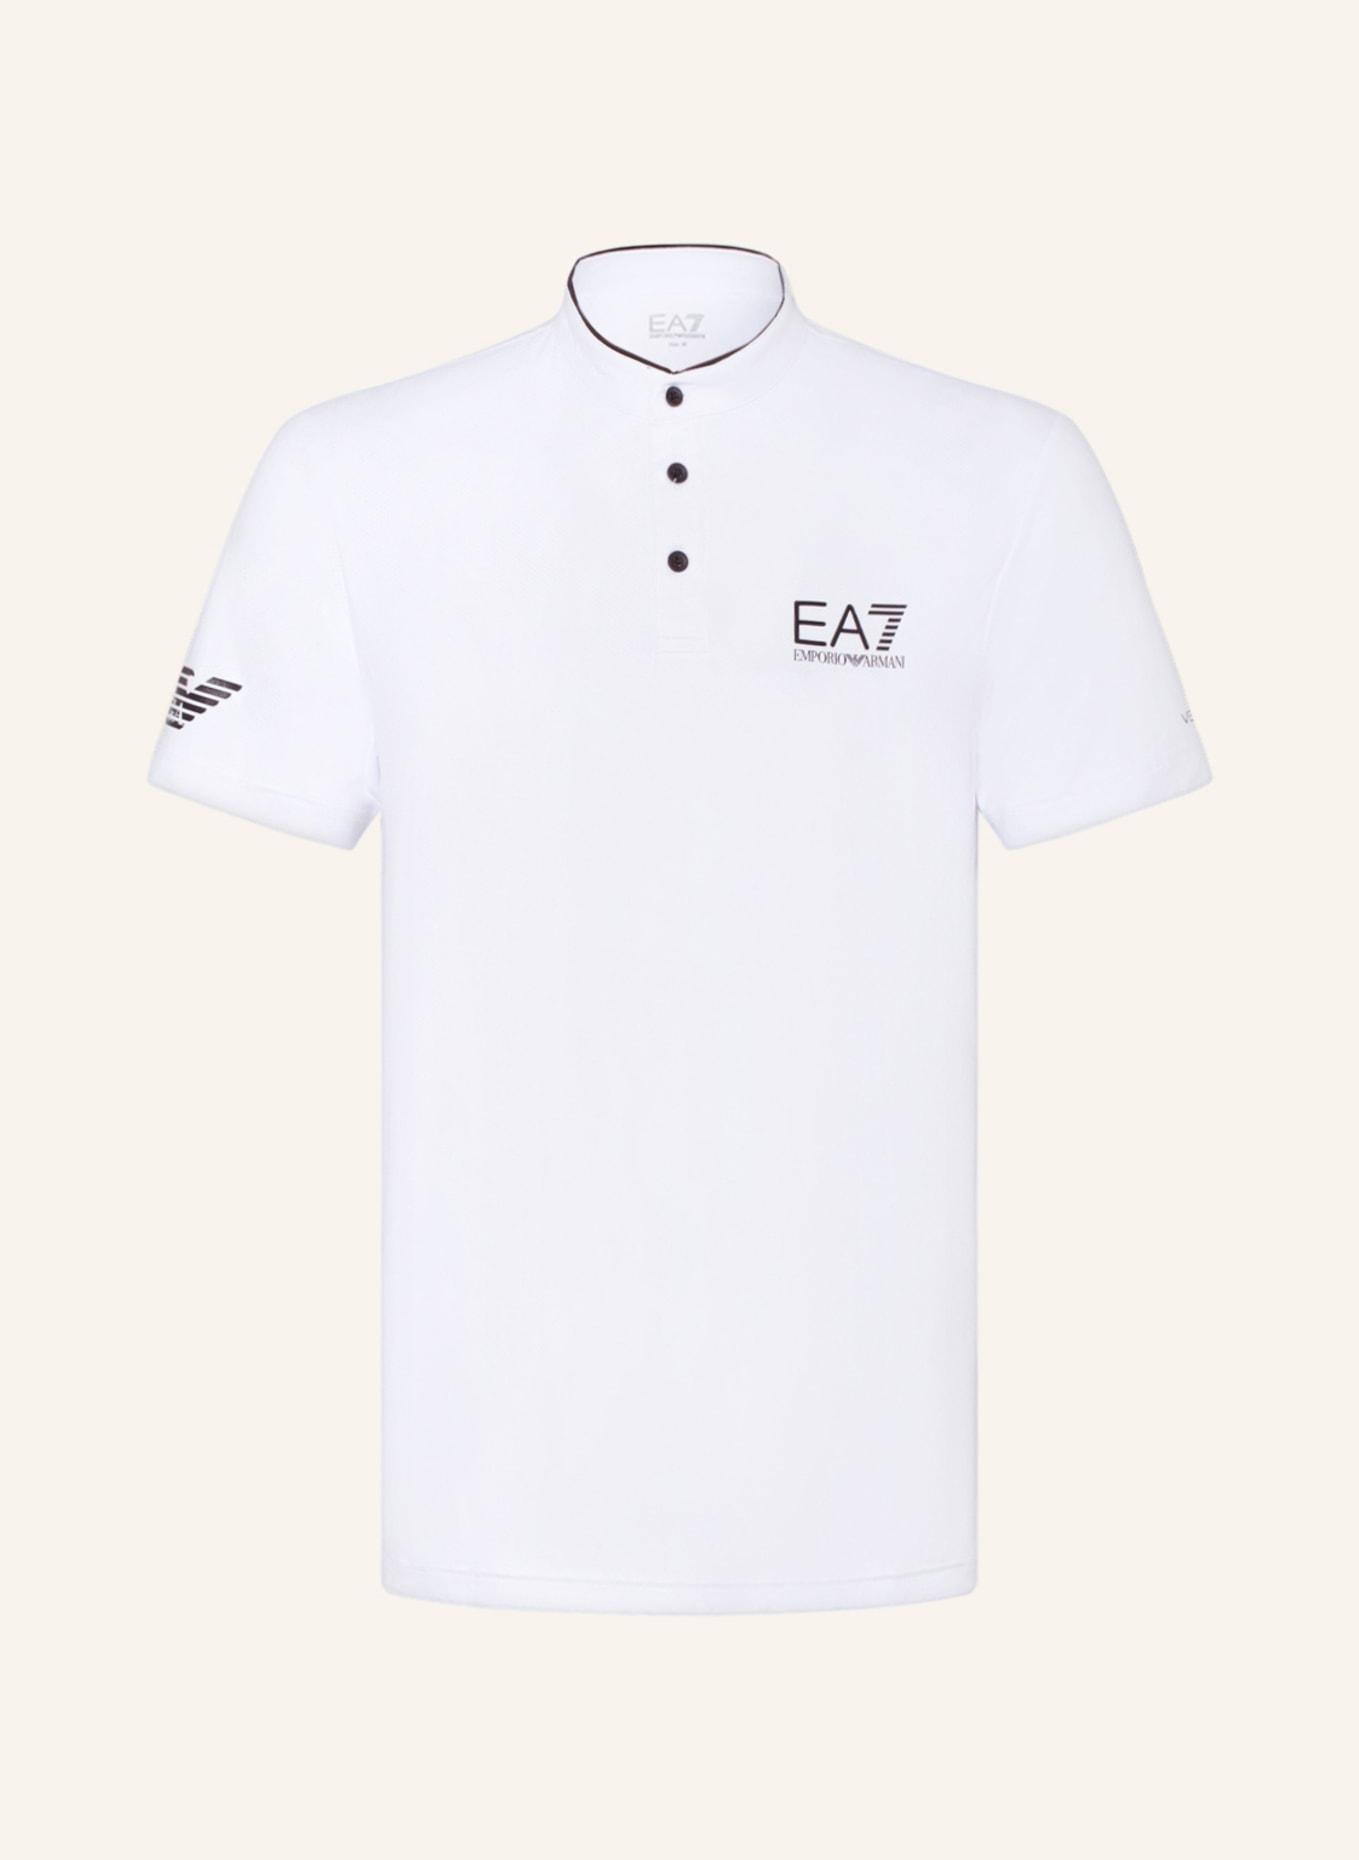 EA7 EMPORIO ARMANI Funktions-Poloshirt PJEMZ, Farbe: WEISS (Bild 1)